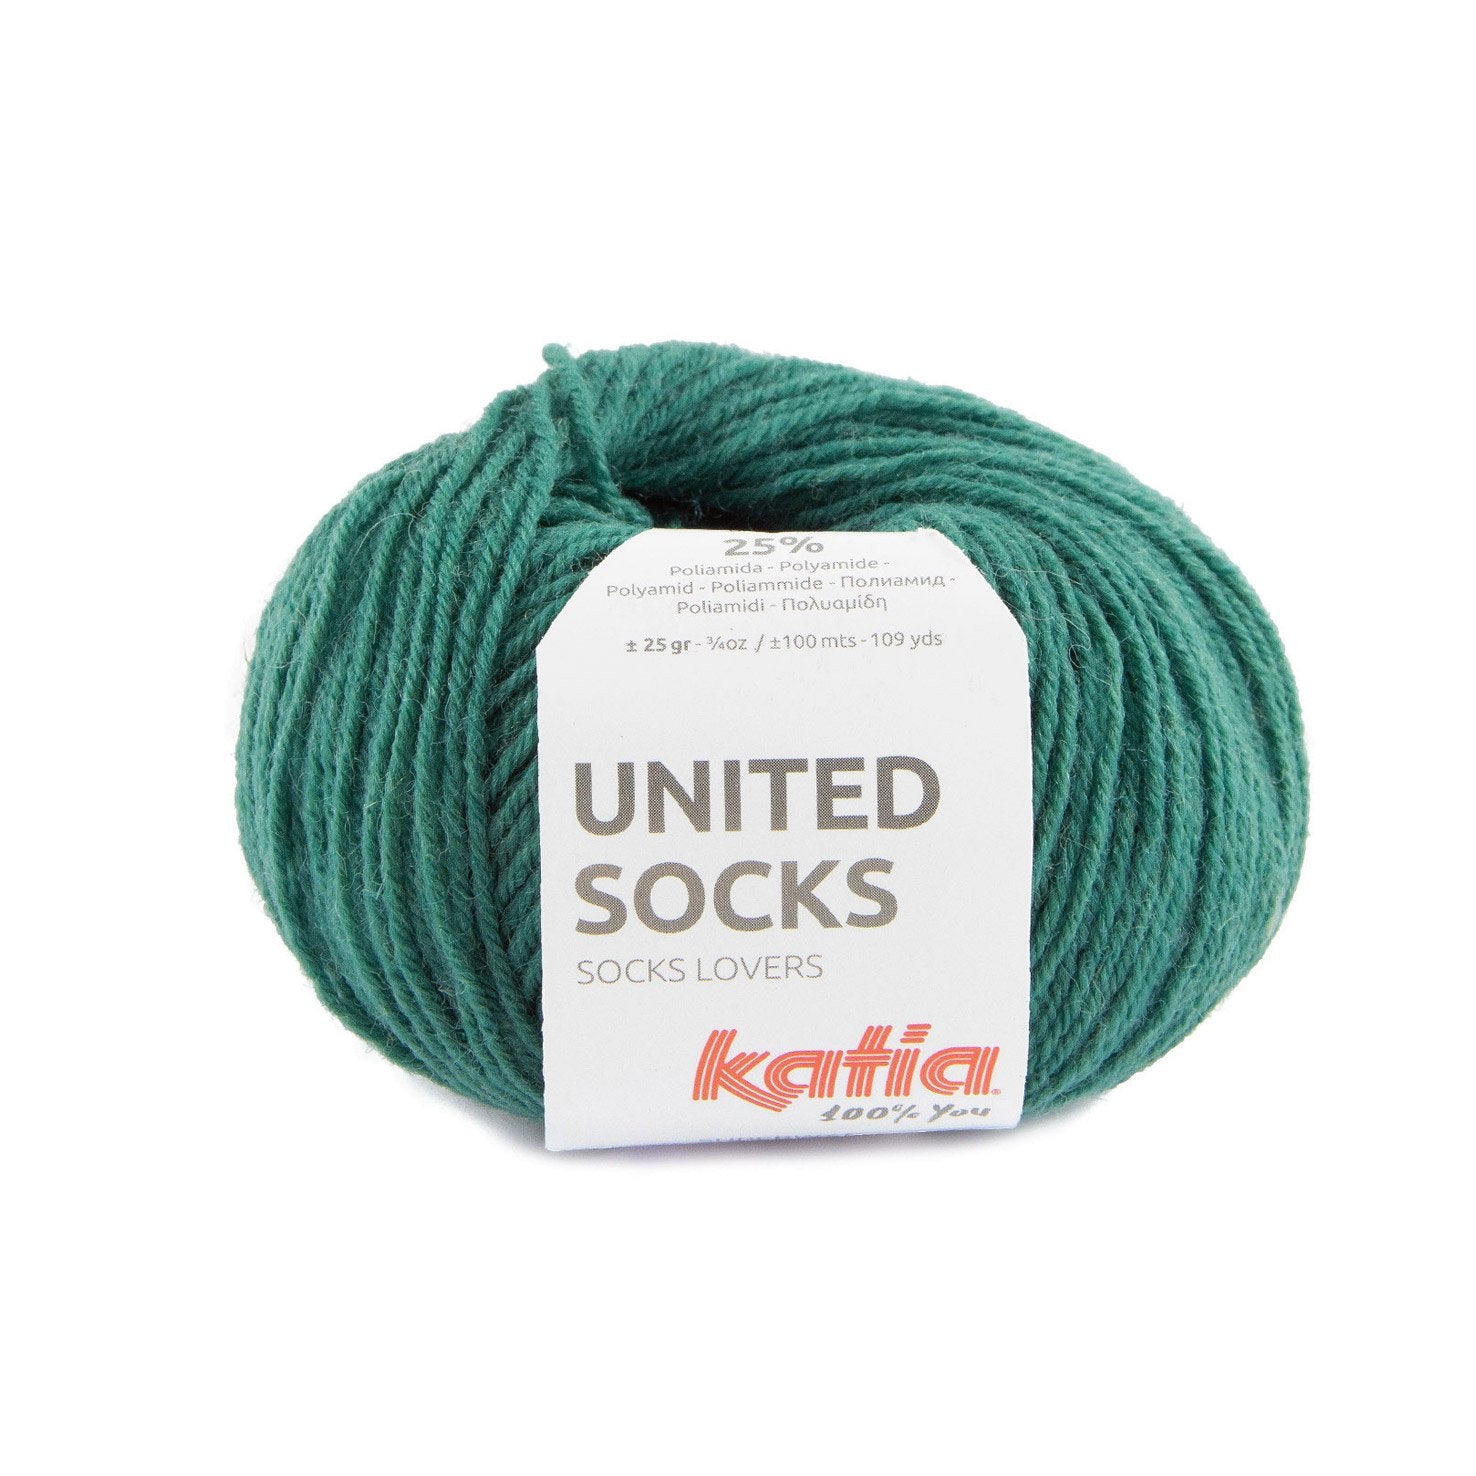 Katia UNITED SOCKS - Ideal wool for knitting quality socks